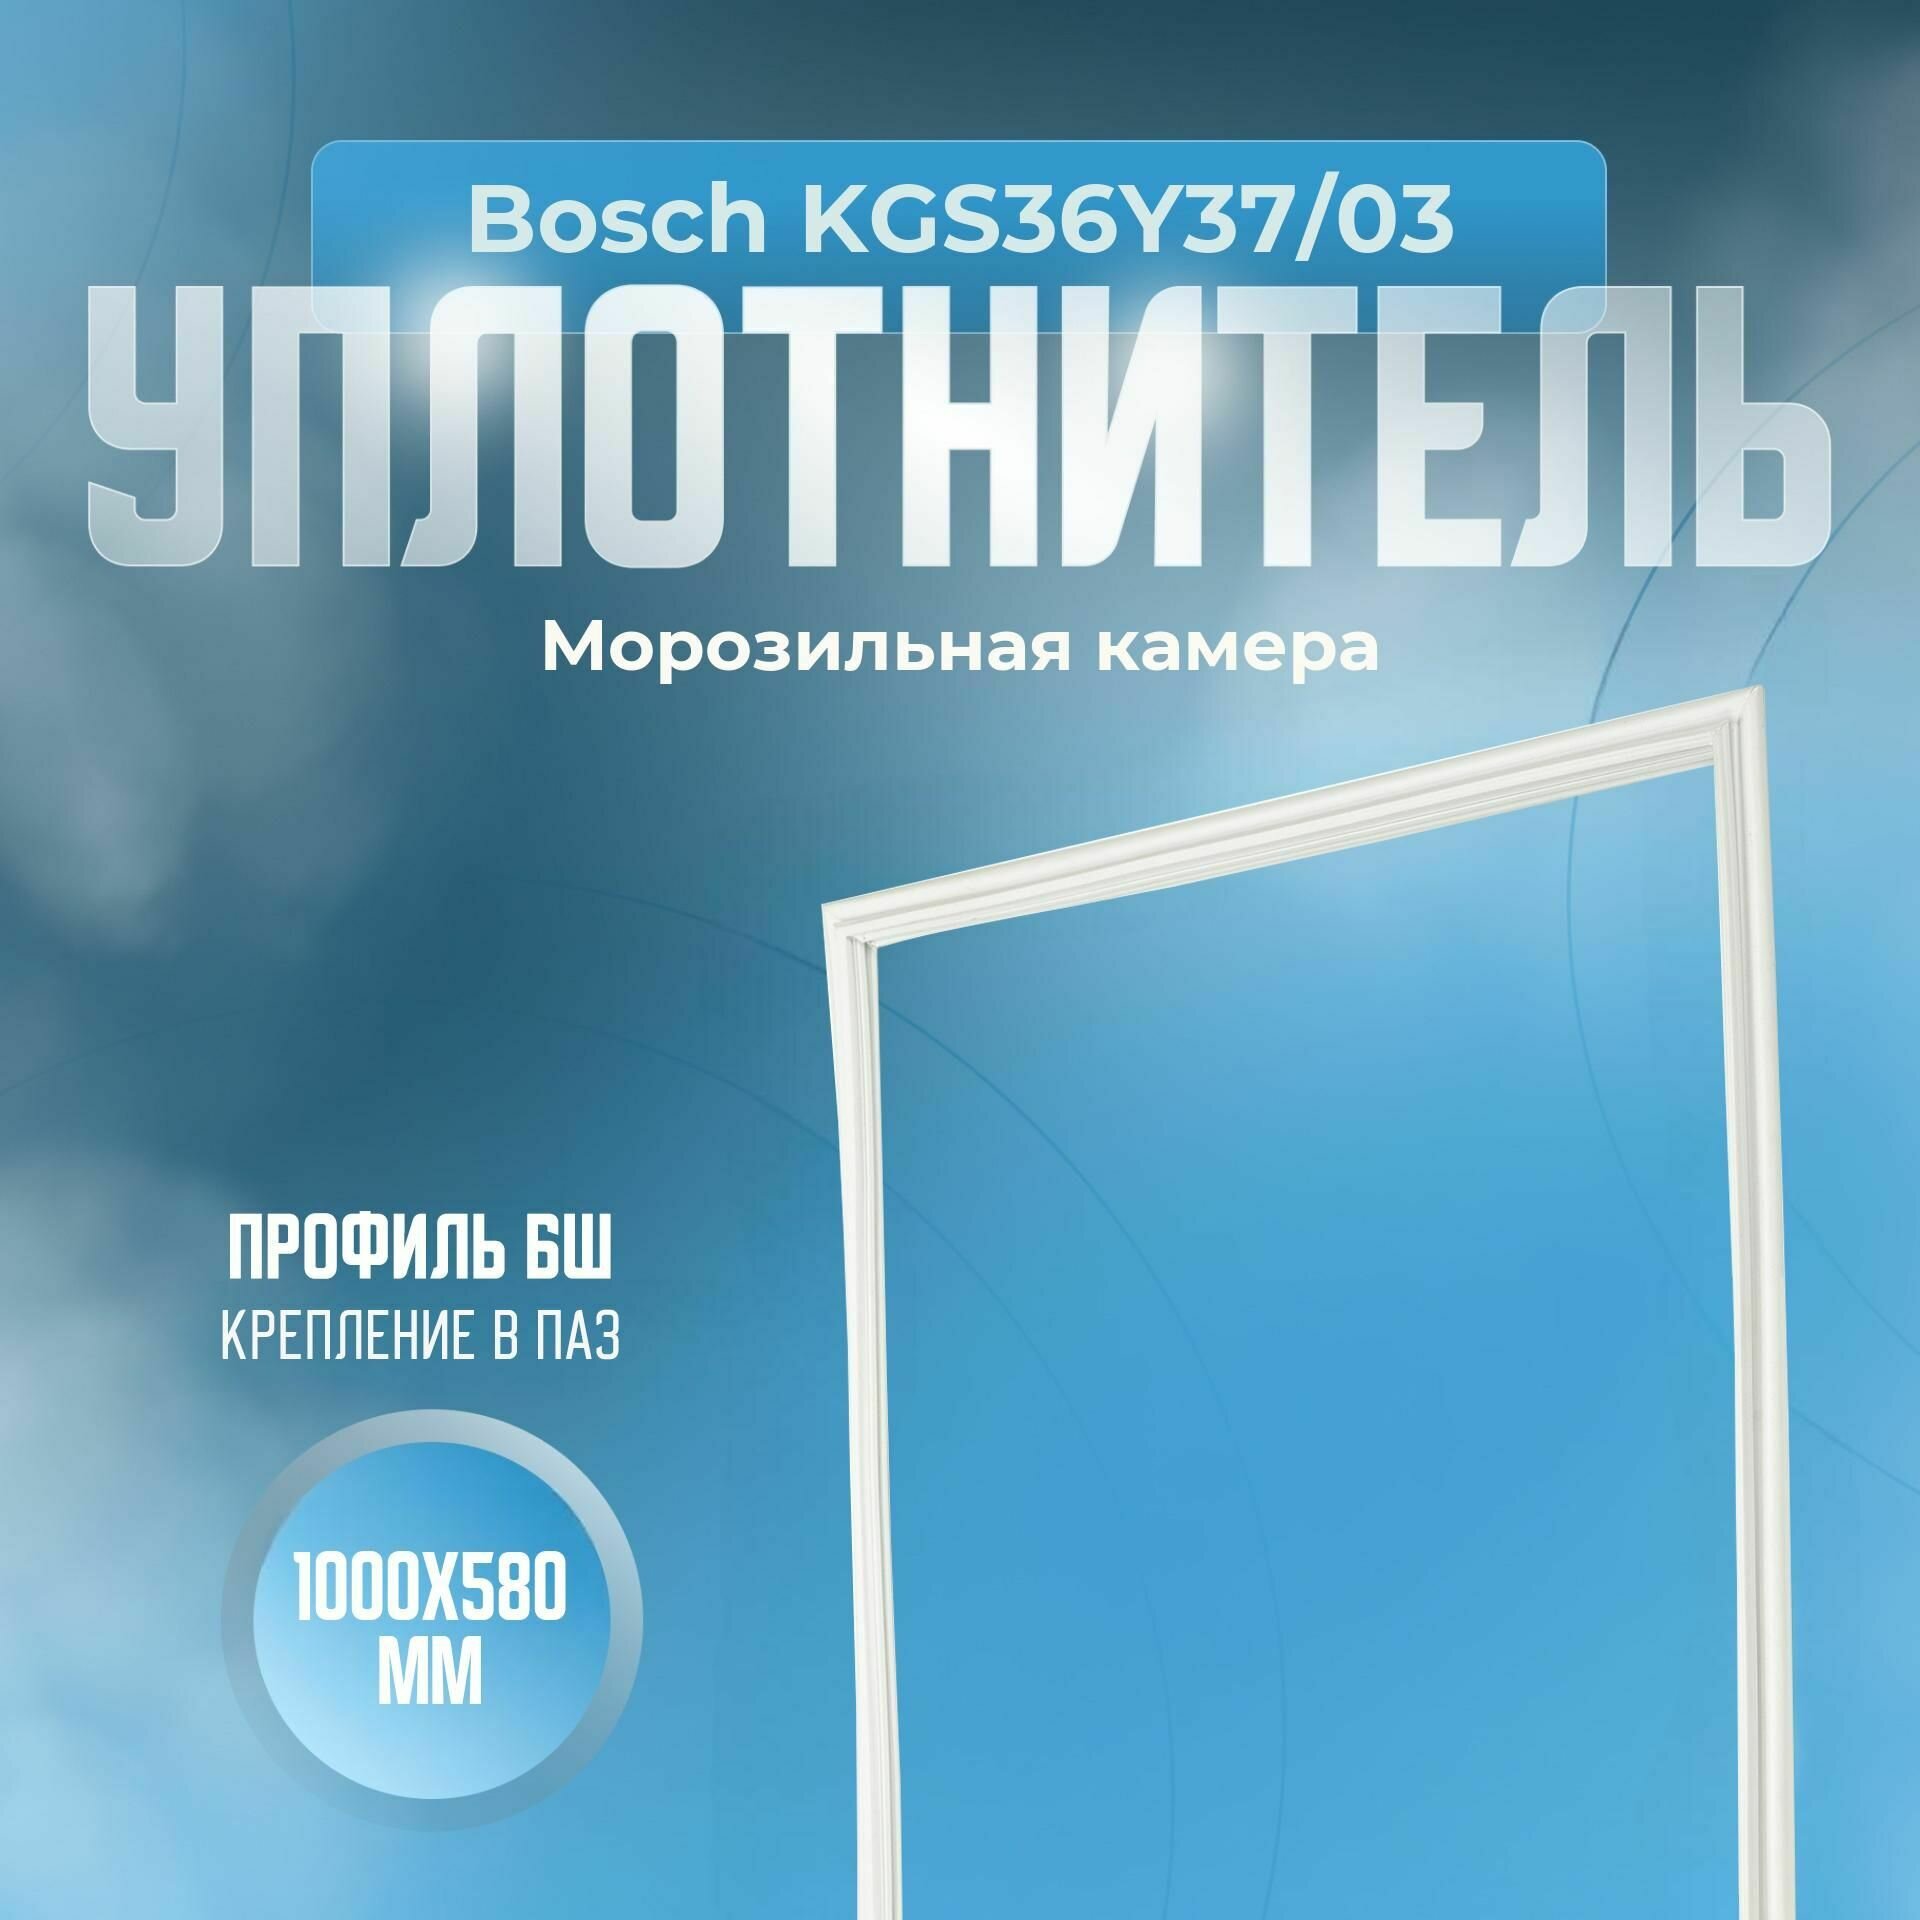 Уплотнитель Bosch KGS36Y37/03. м. к, Размер - 1000х580 мм. БШ